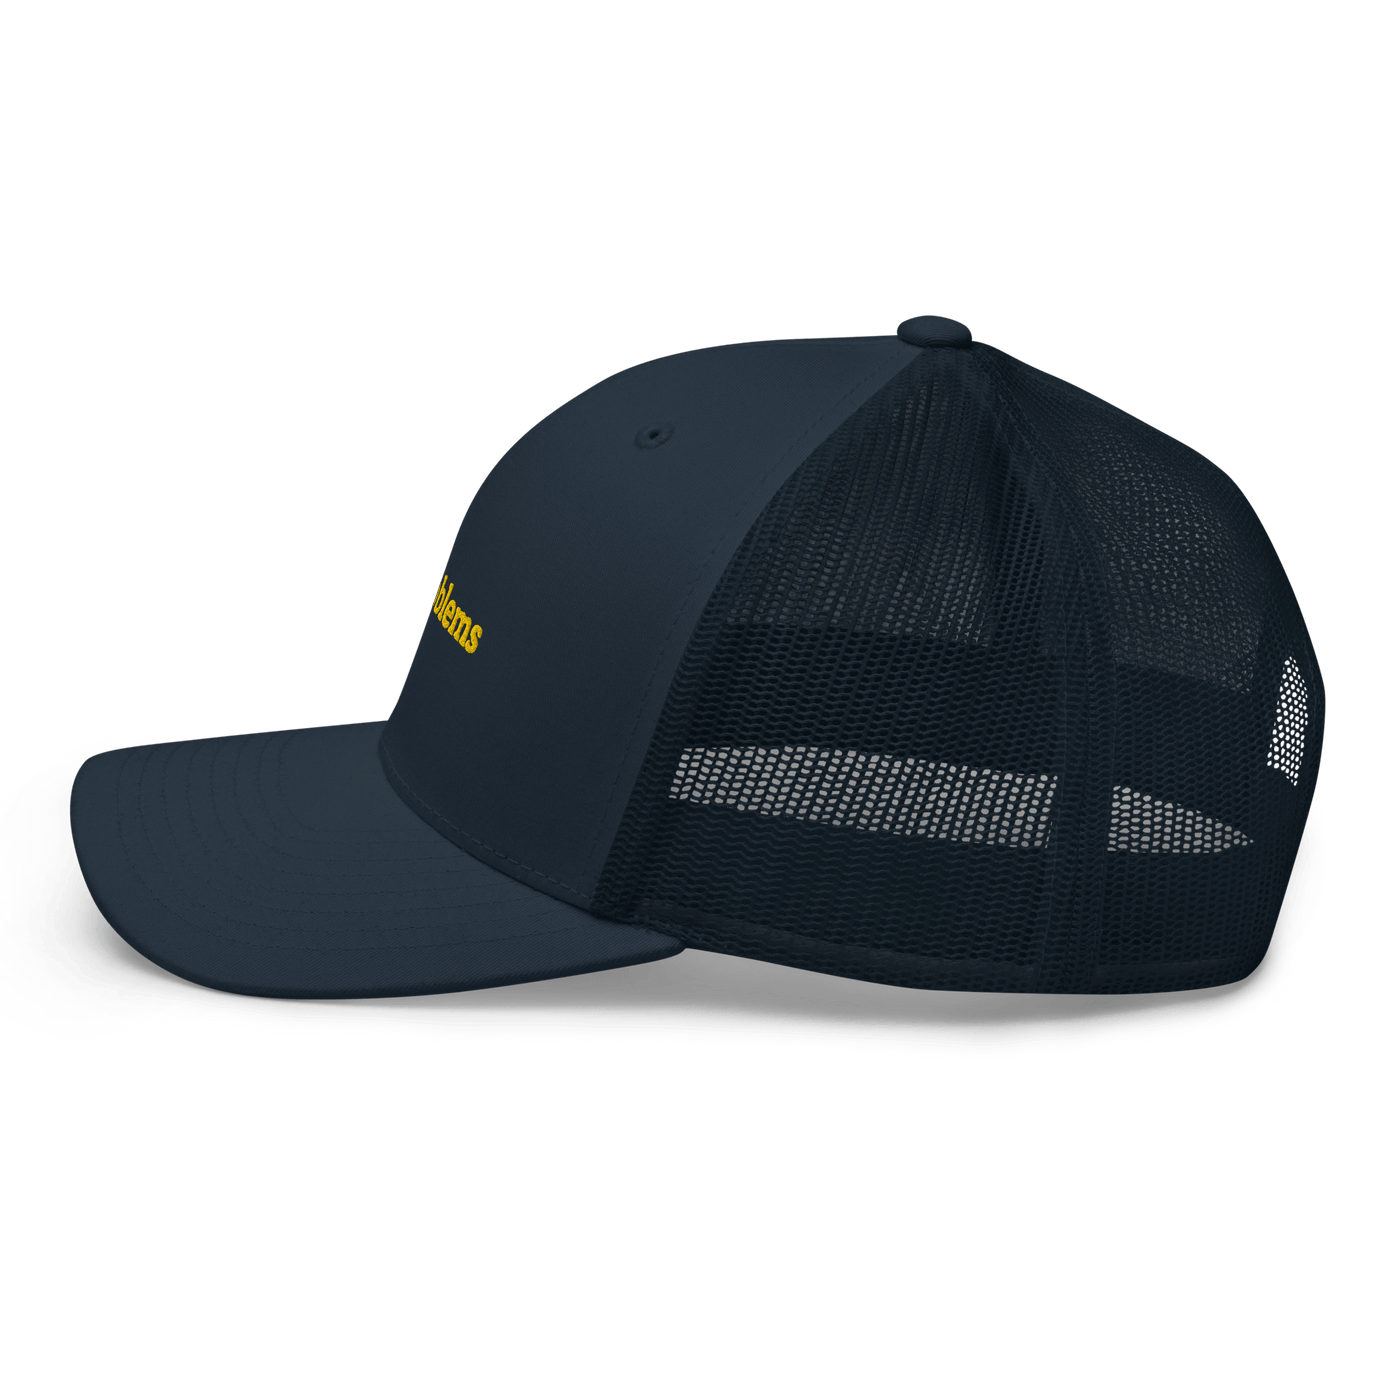 99 problems Trucker Cap - Navy - - Just Another Cap Store